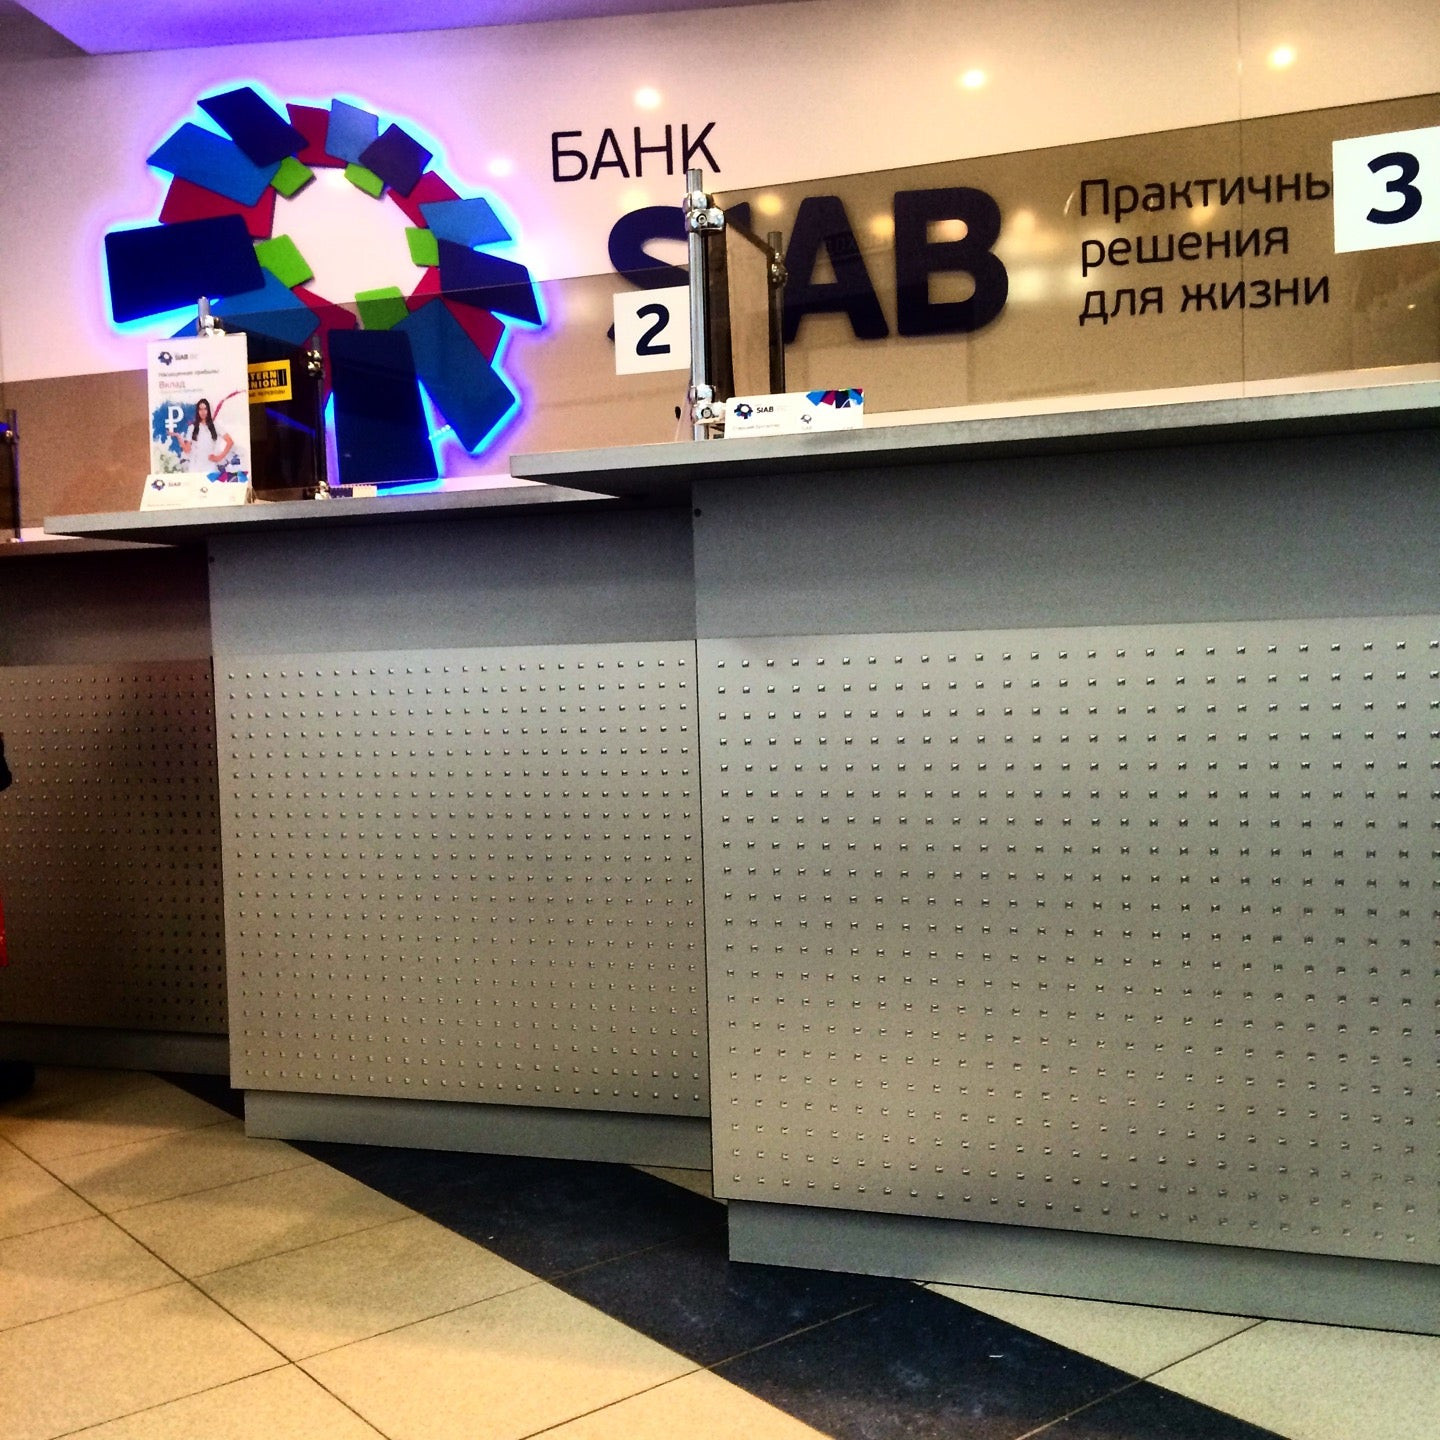 Банк сиаб сайт. Банк siab. Банк СИАБ Санкт-Петербург. Банк СИАБ московские ворота. ПАО банк «СИАБ» логотип.